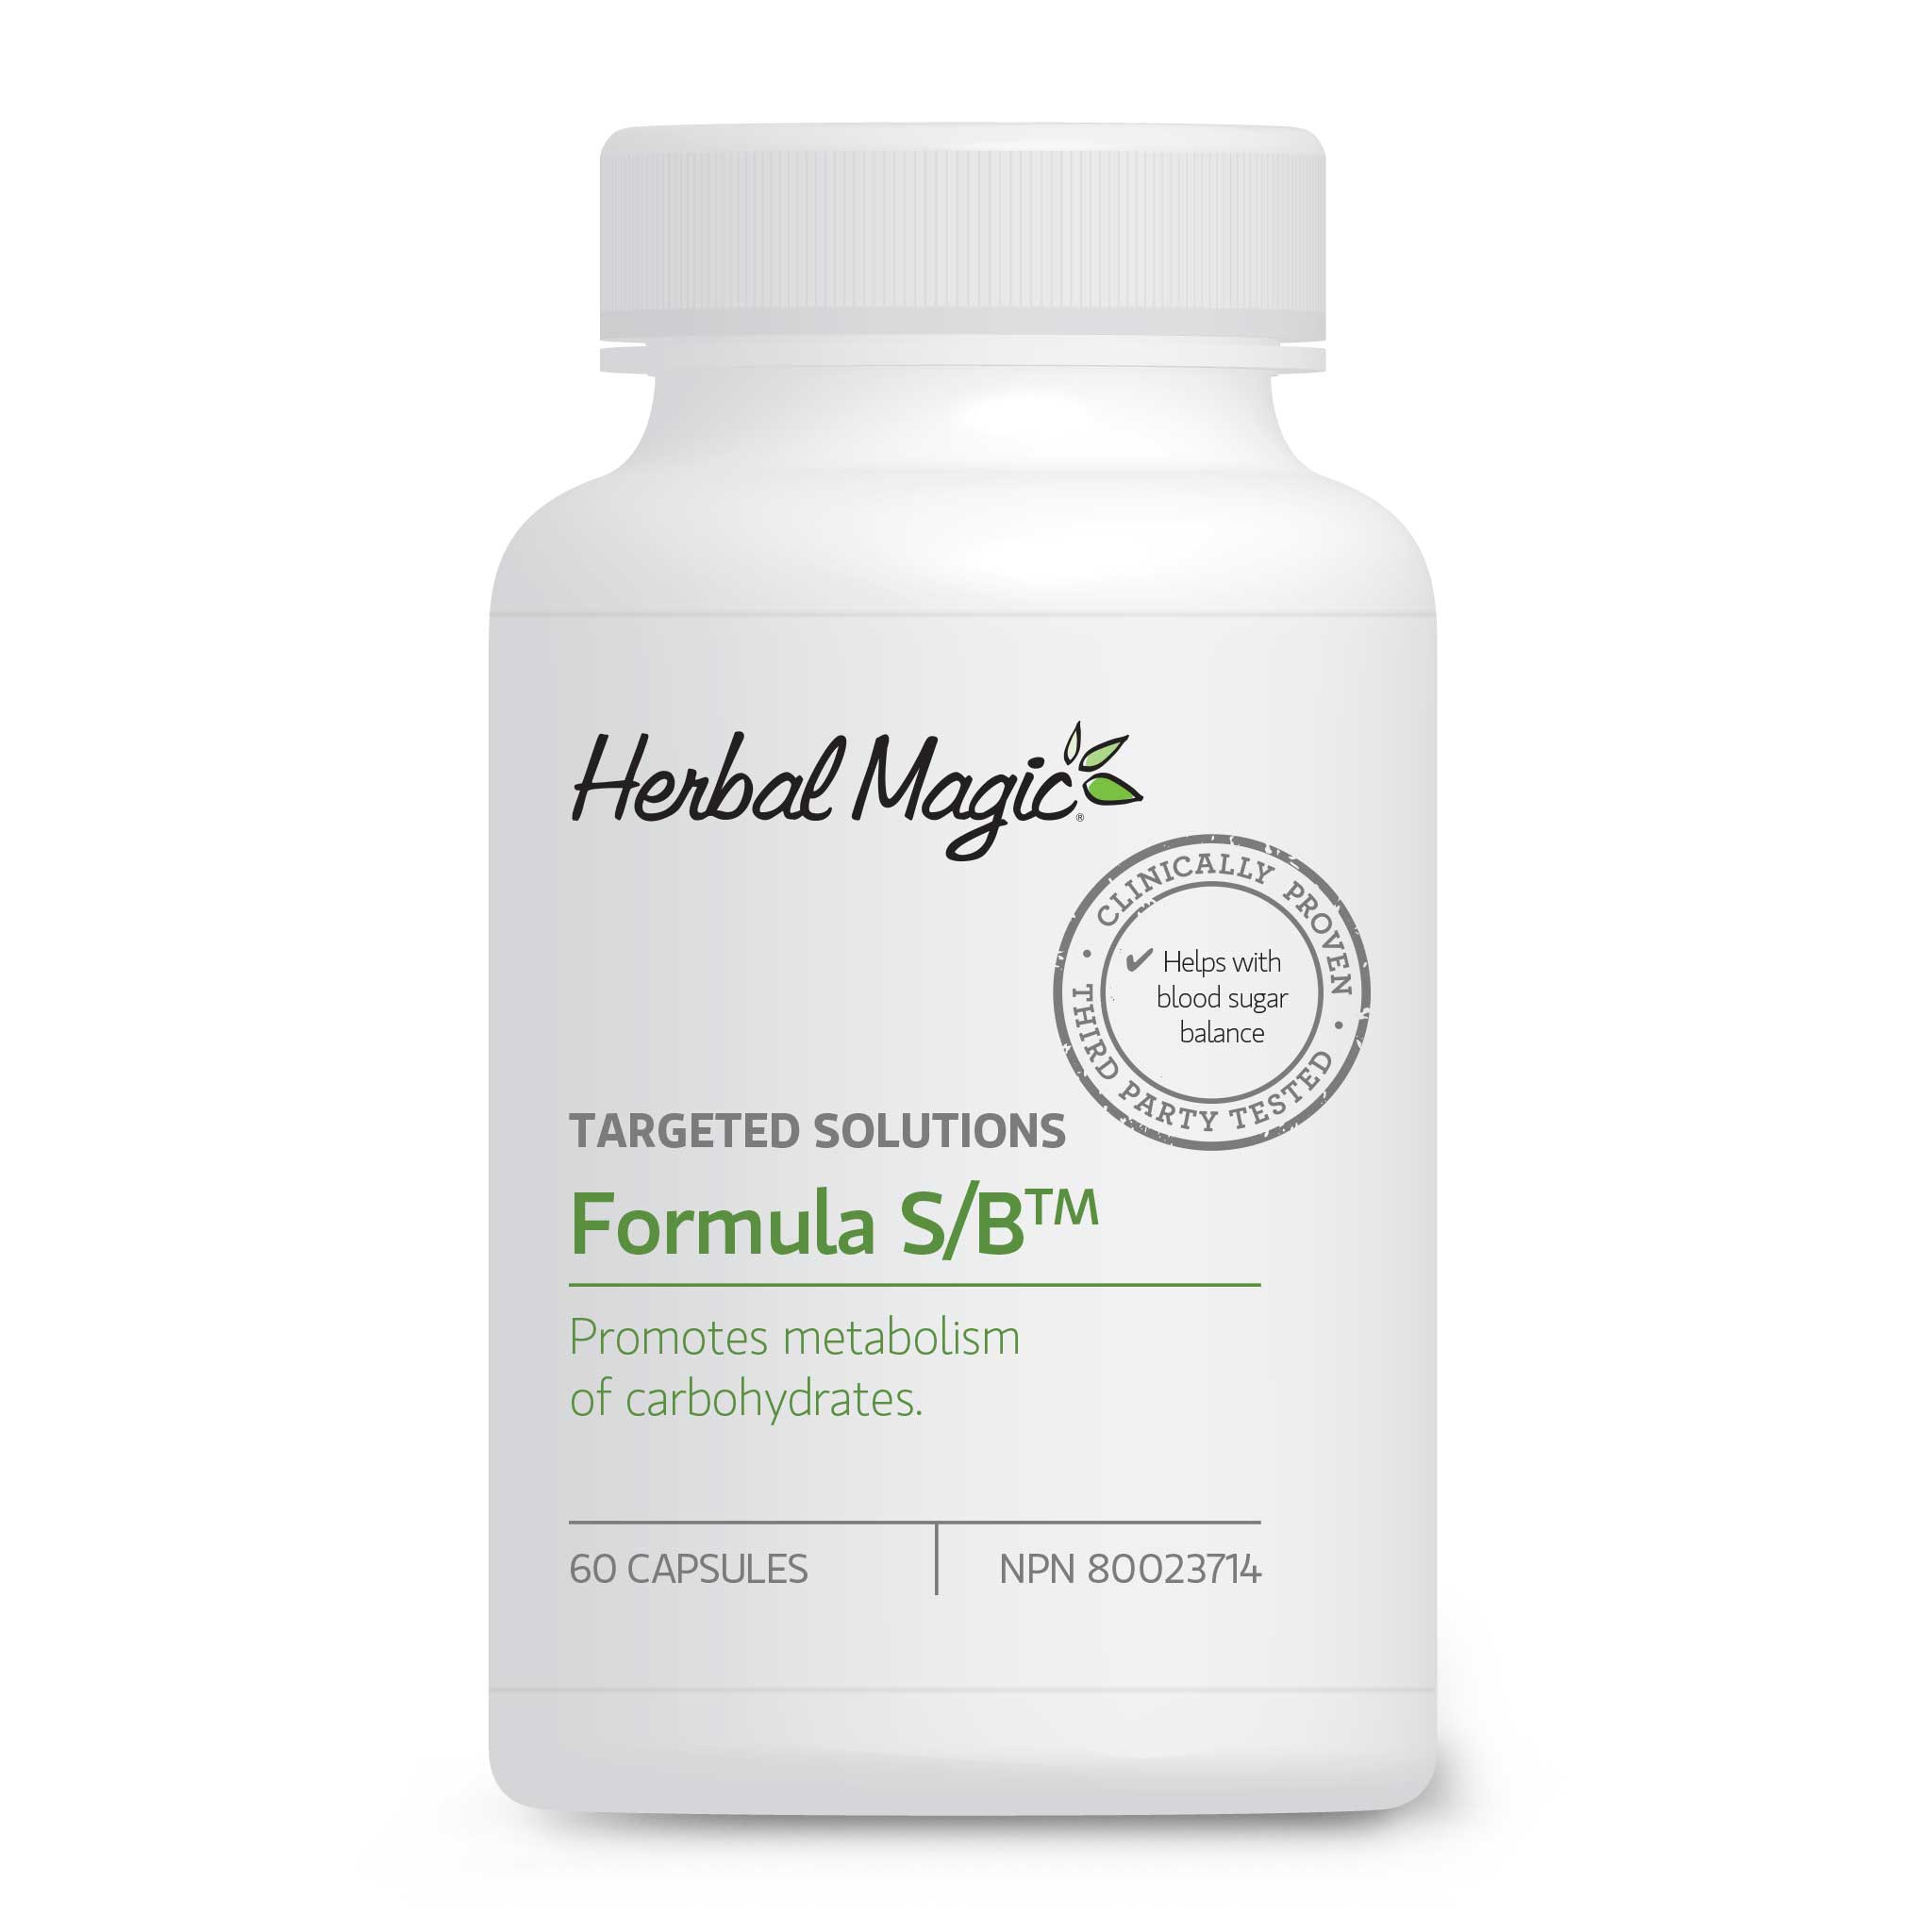 Herbal Magic Formula S/B is a Metabolism Booster and Sugar Blocker